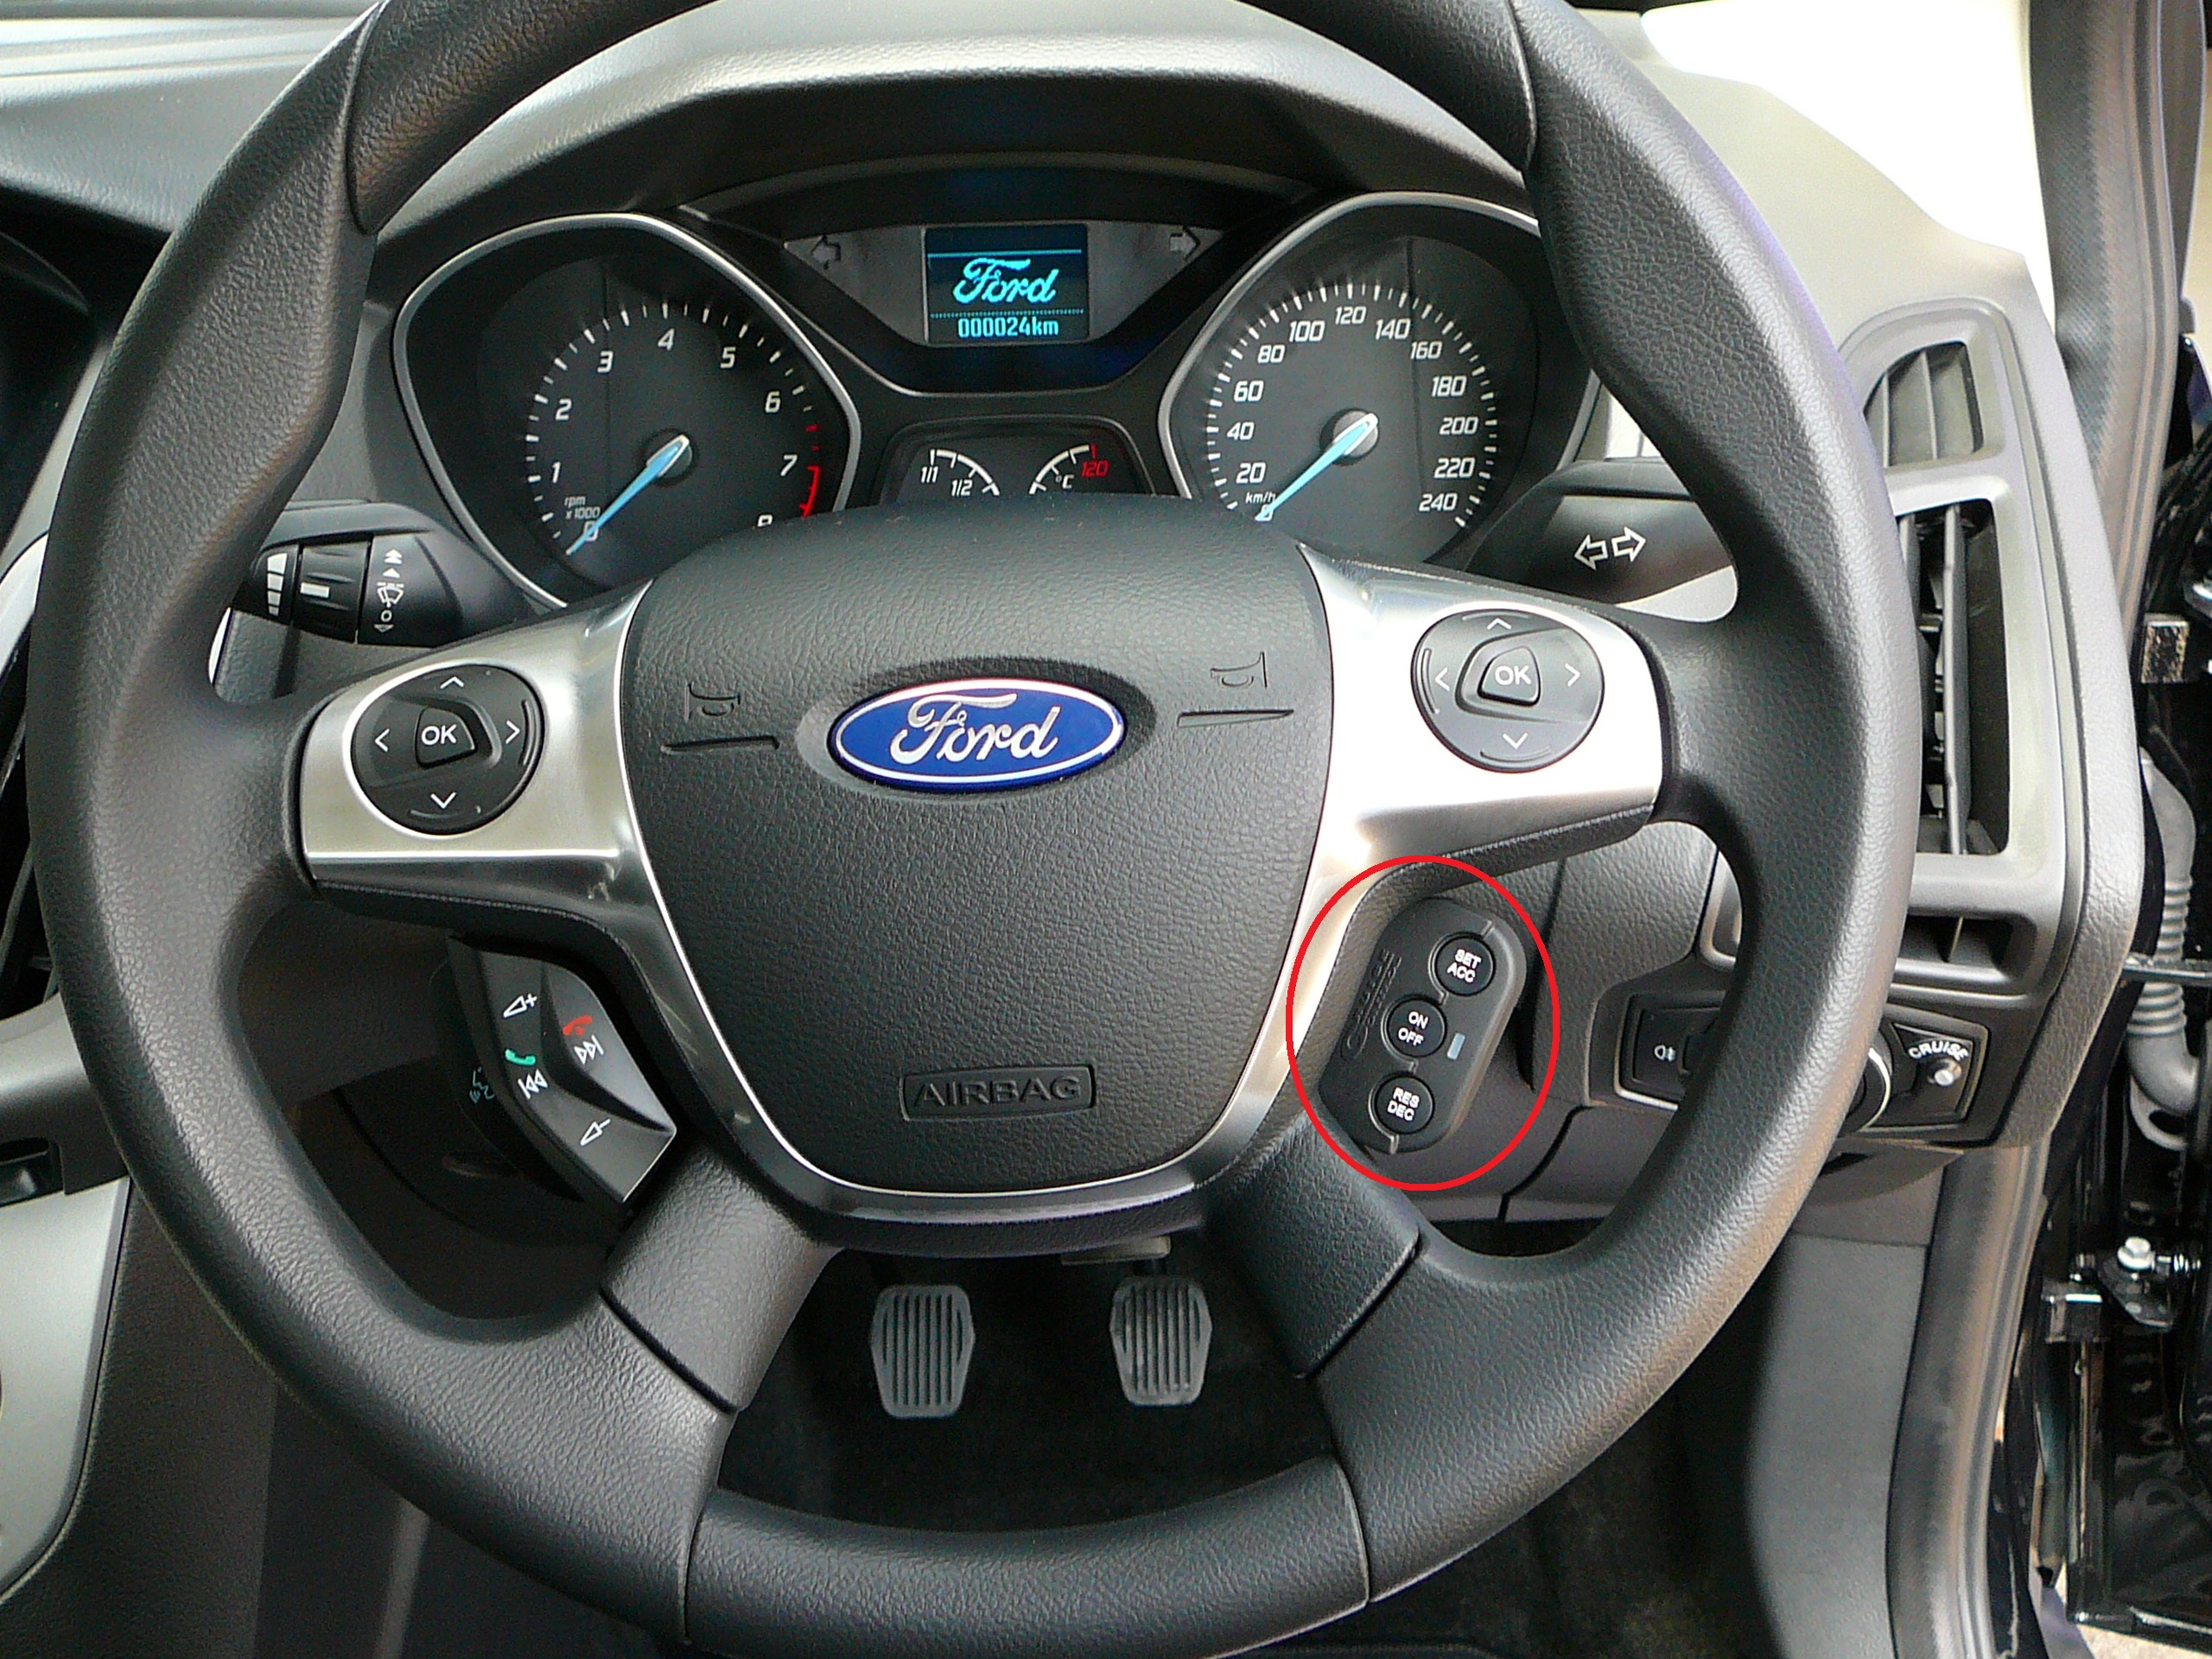 Ford Focus 2013 – Cruise Control